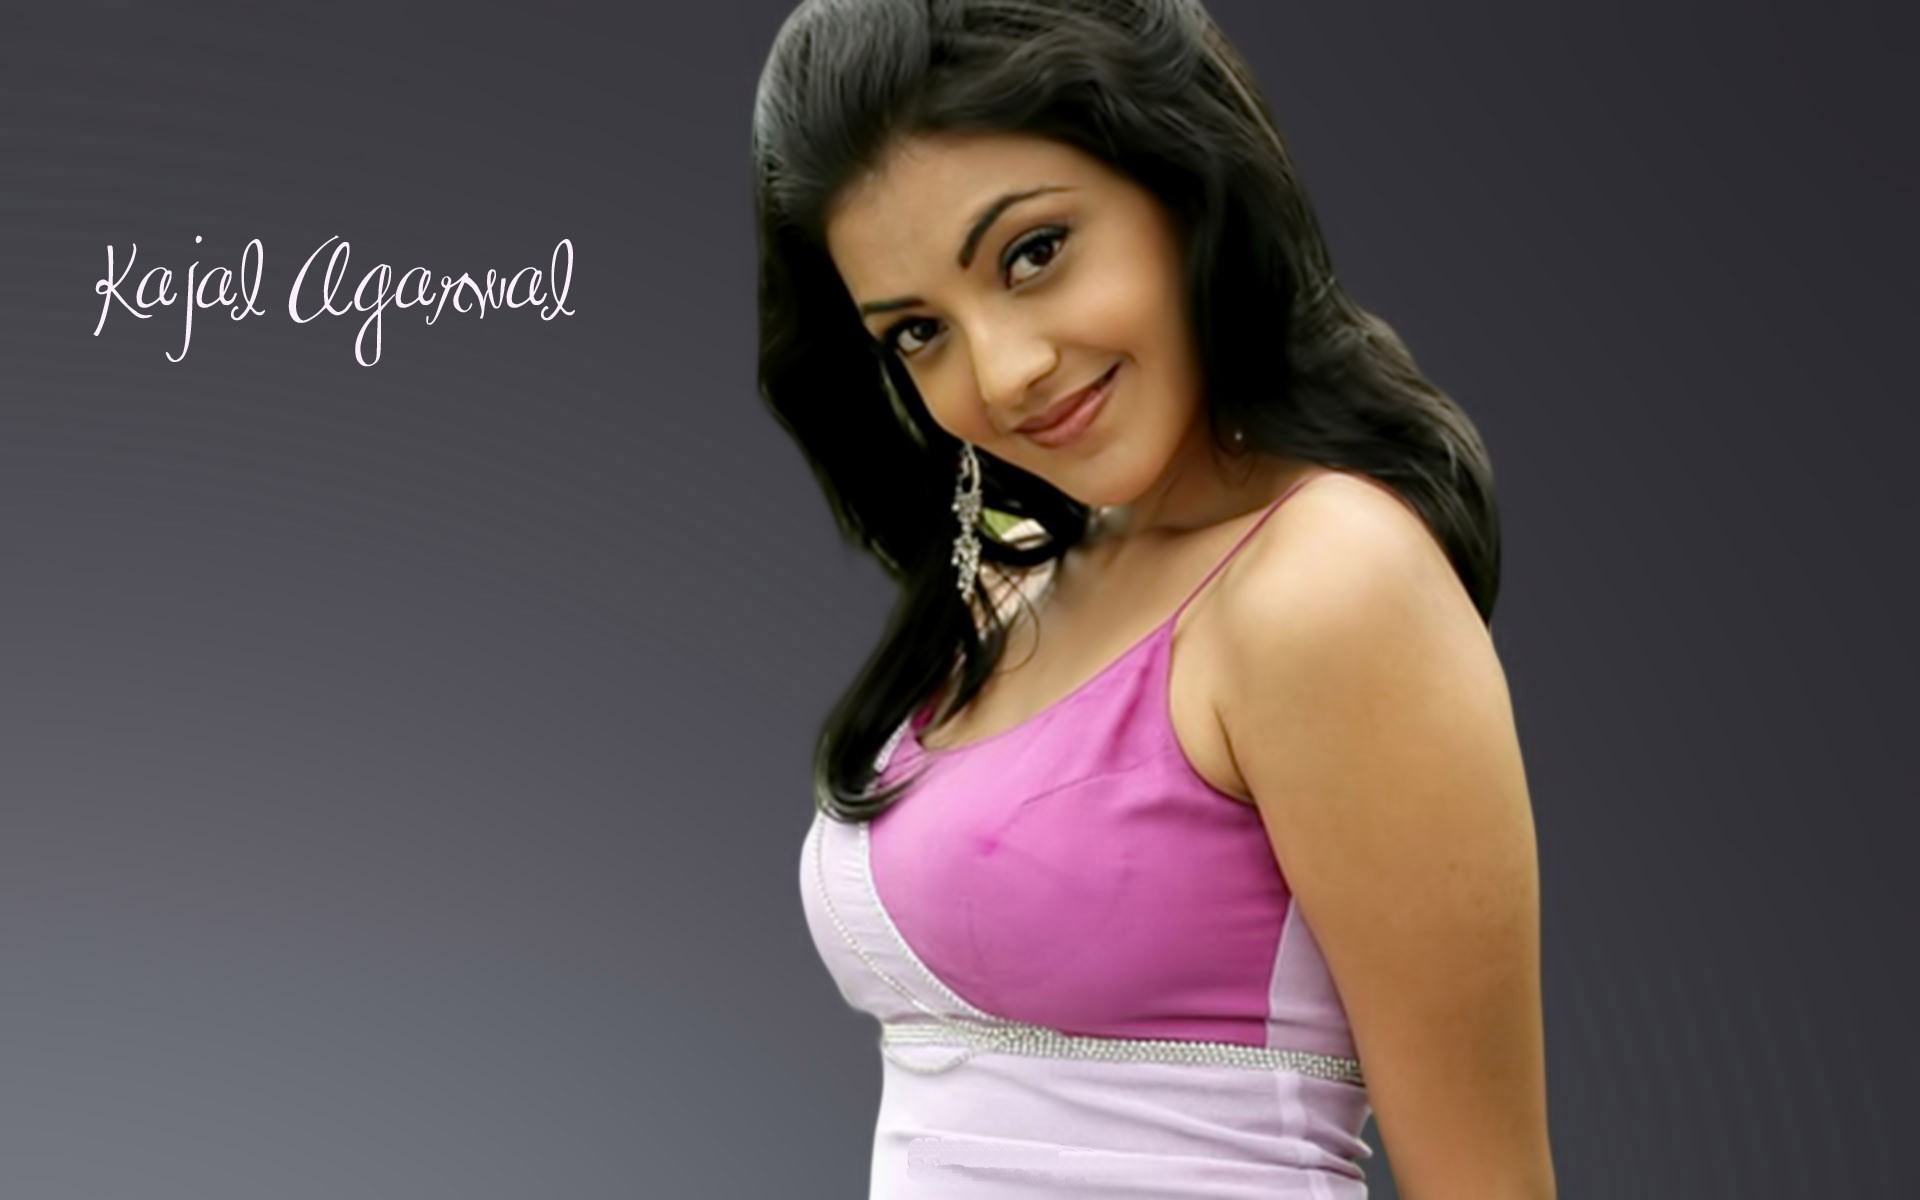 Full Hd Wallpapers Bollywood Actress - WallpaperSafari